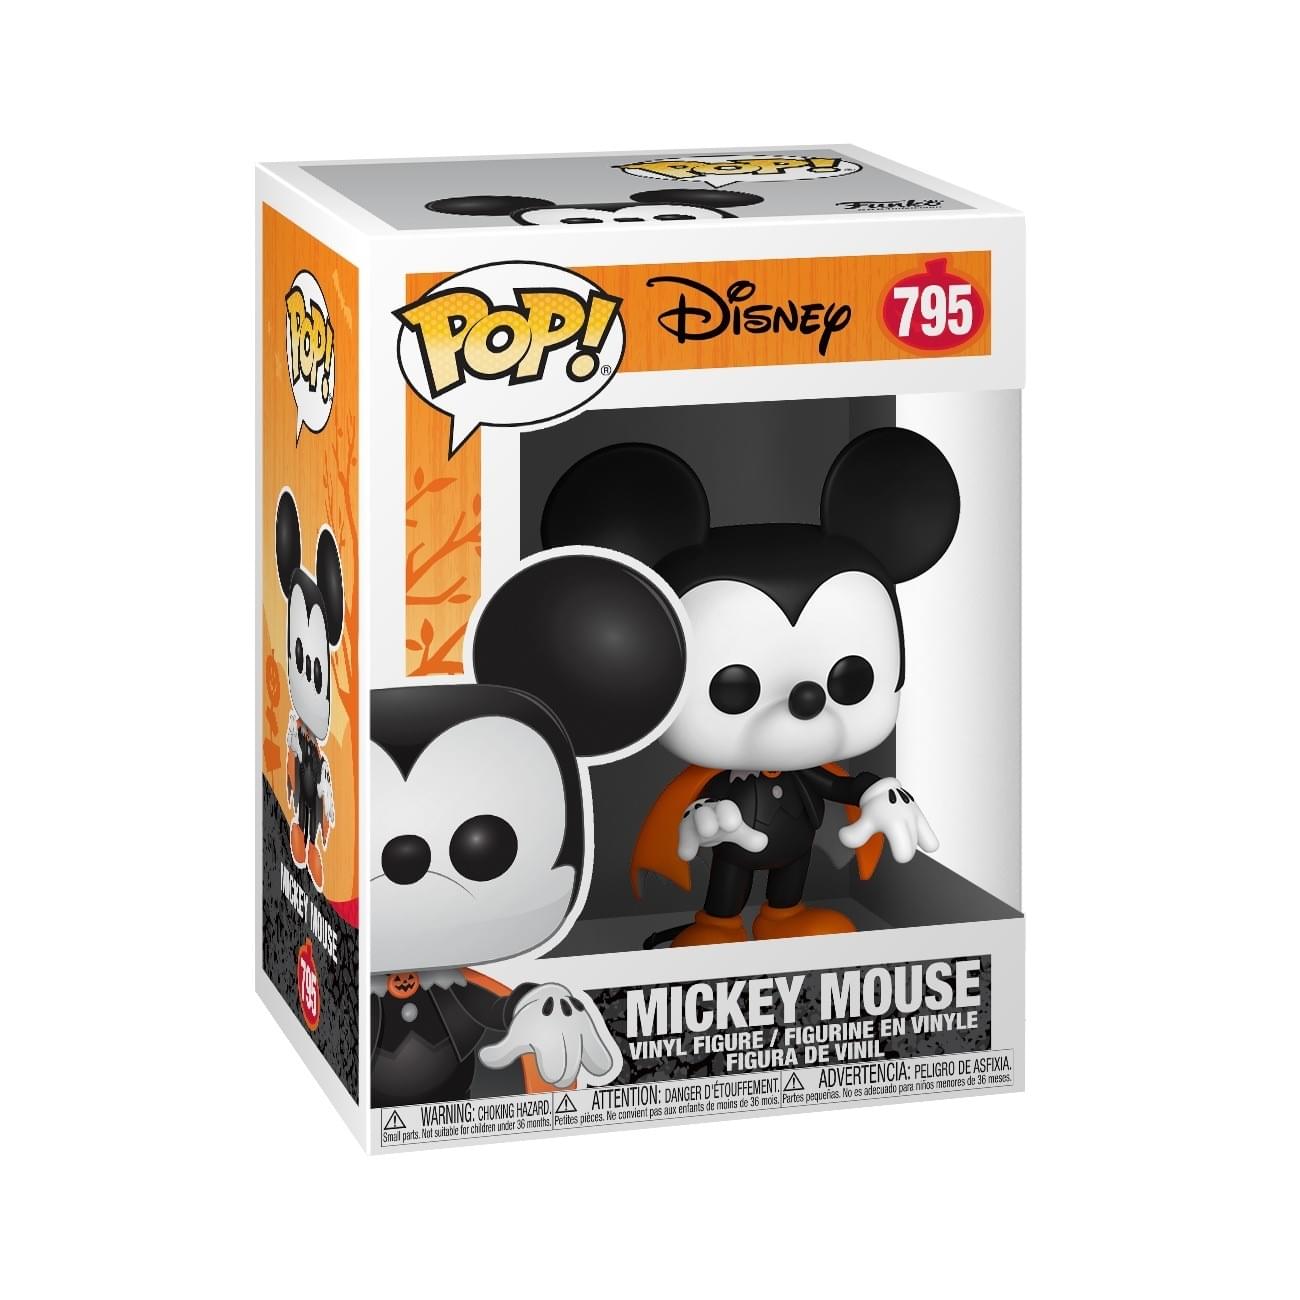 Disney Halloween Funko POP Vinyl Figure | Spooky Mickey